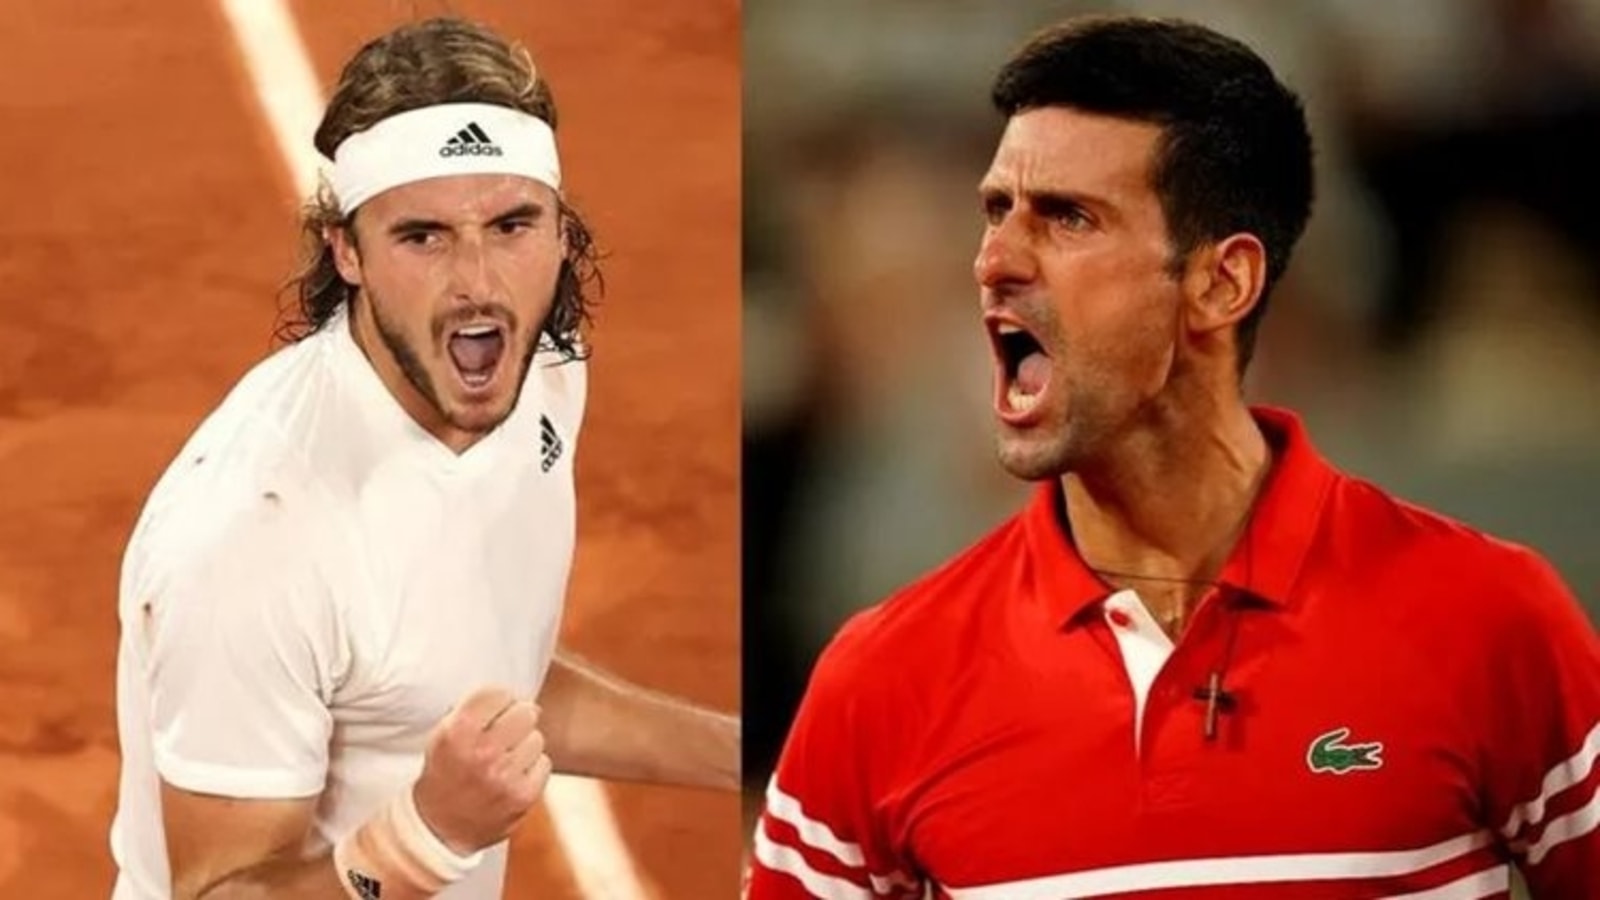 Watch Djokovics reaction after journalist corrects his comment on Tsitsipas Tennis News